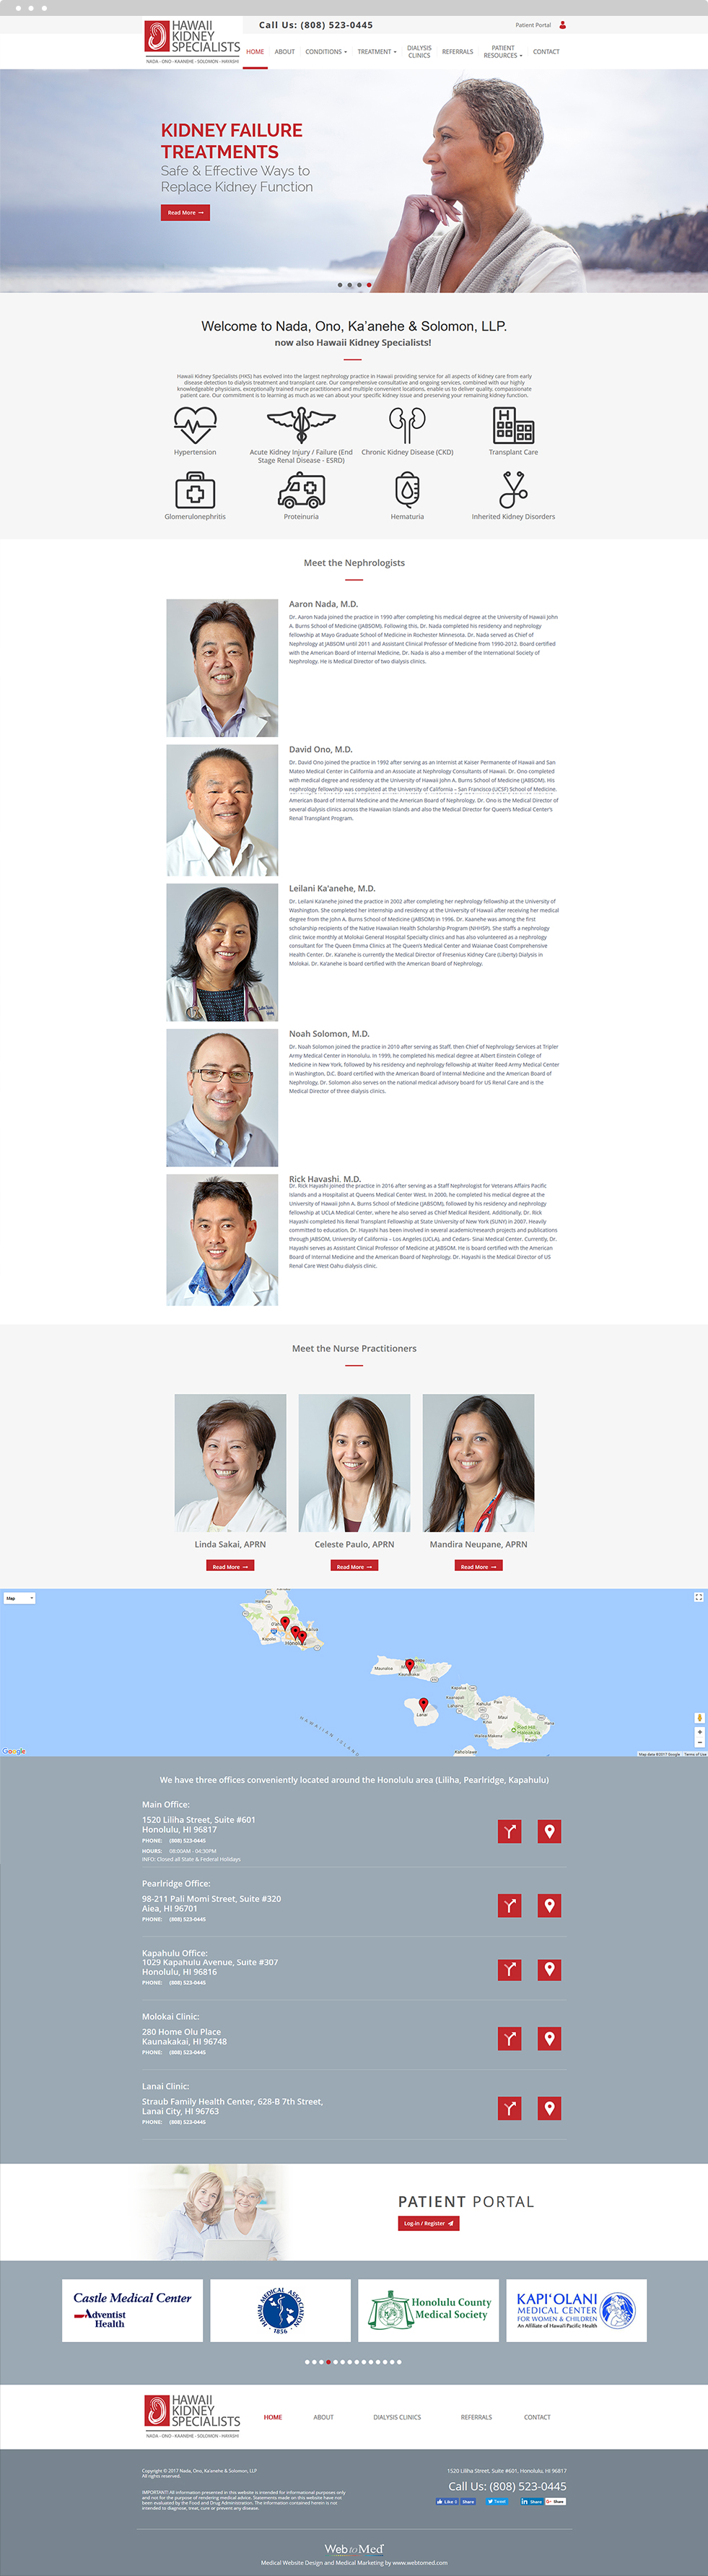 Nephrology Website Design - Hawaii Kidney Specialists - Homepage